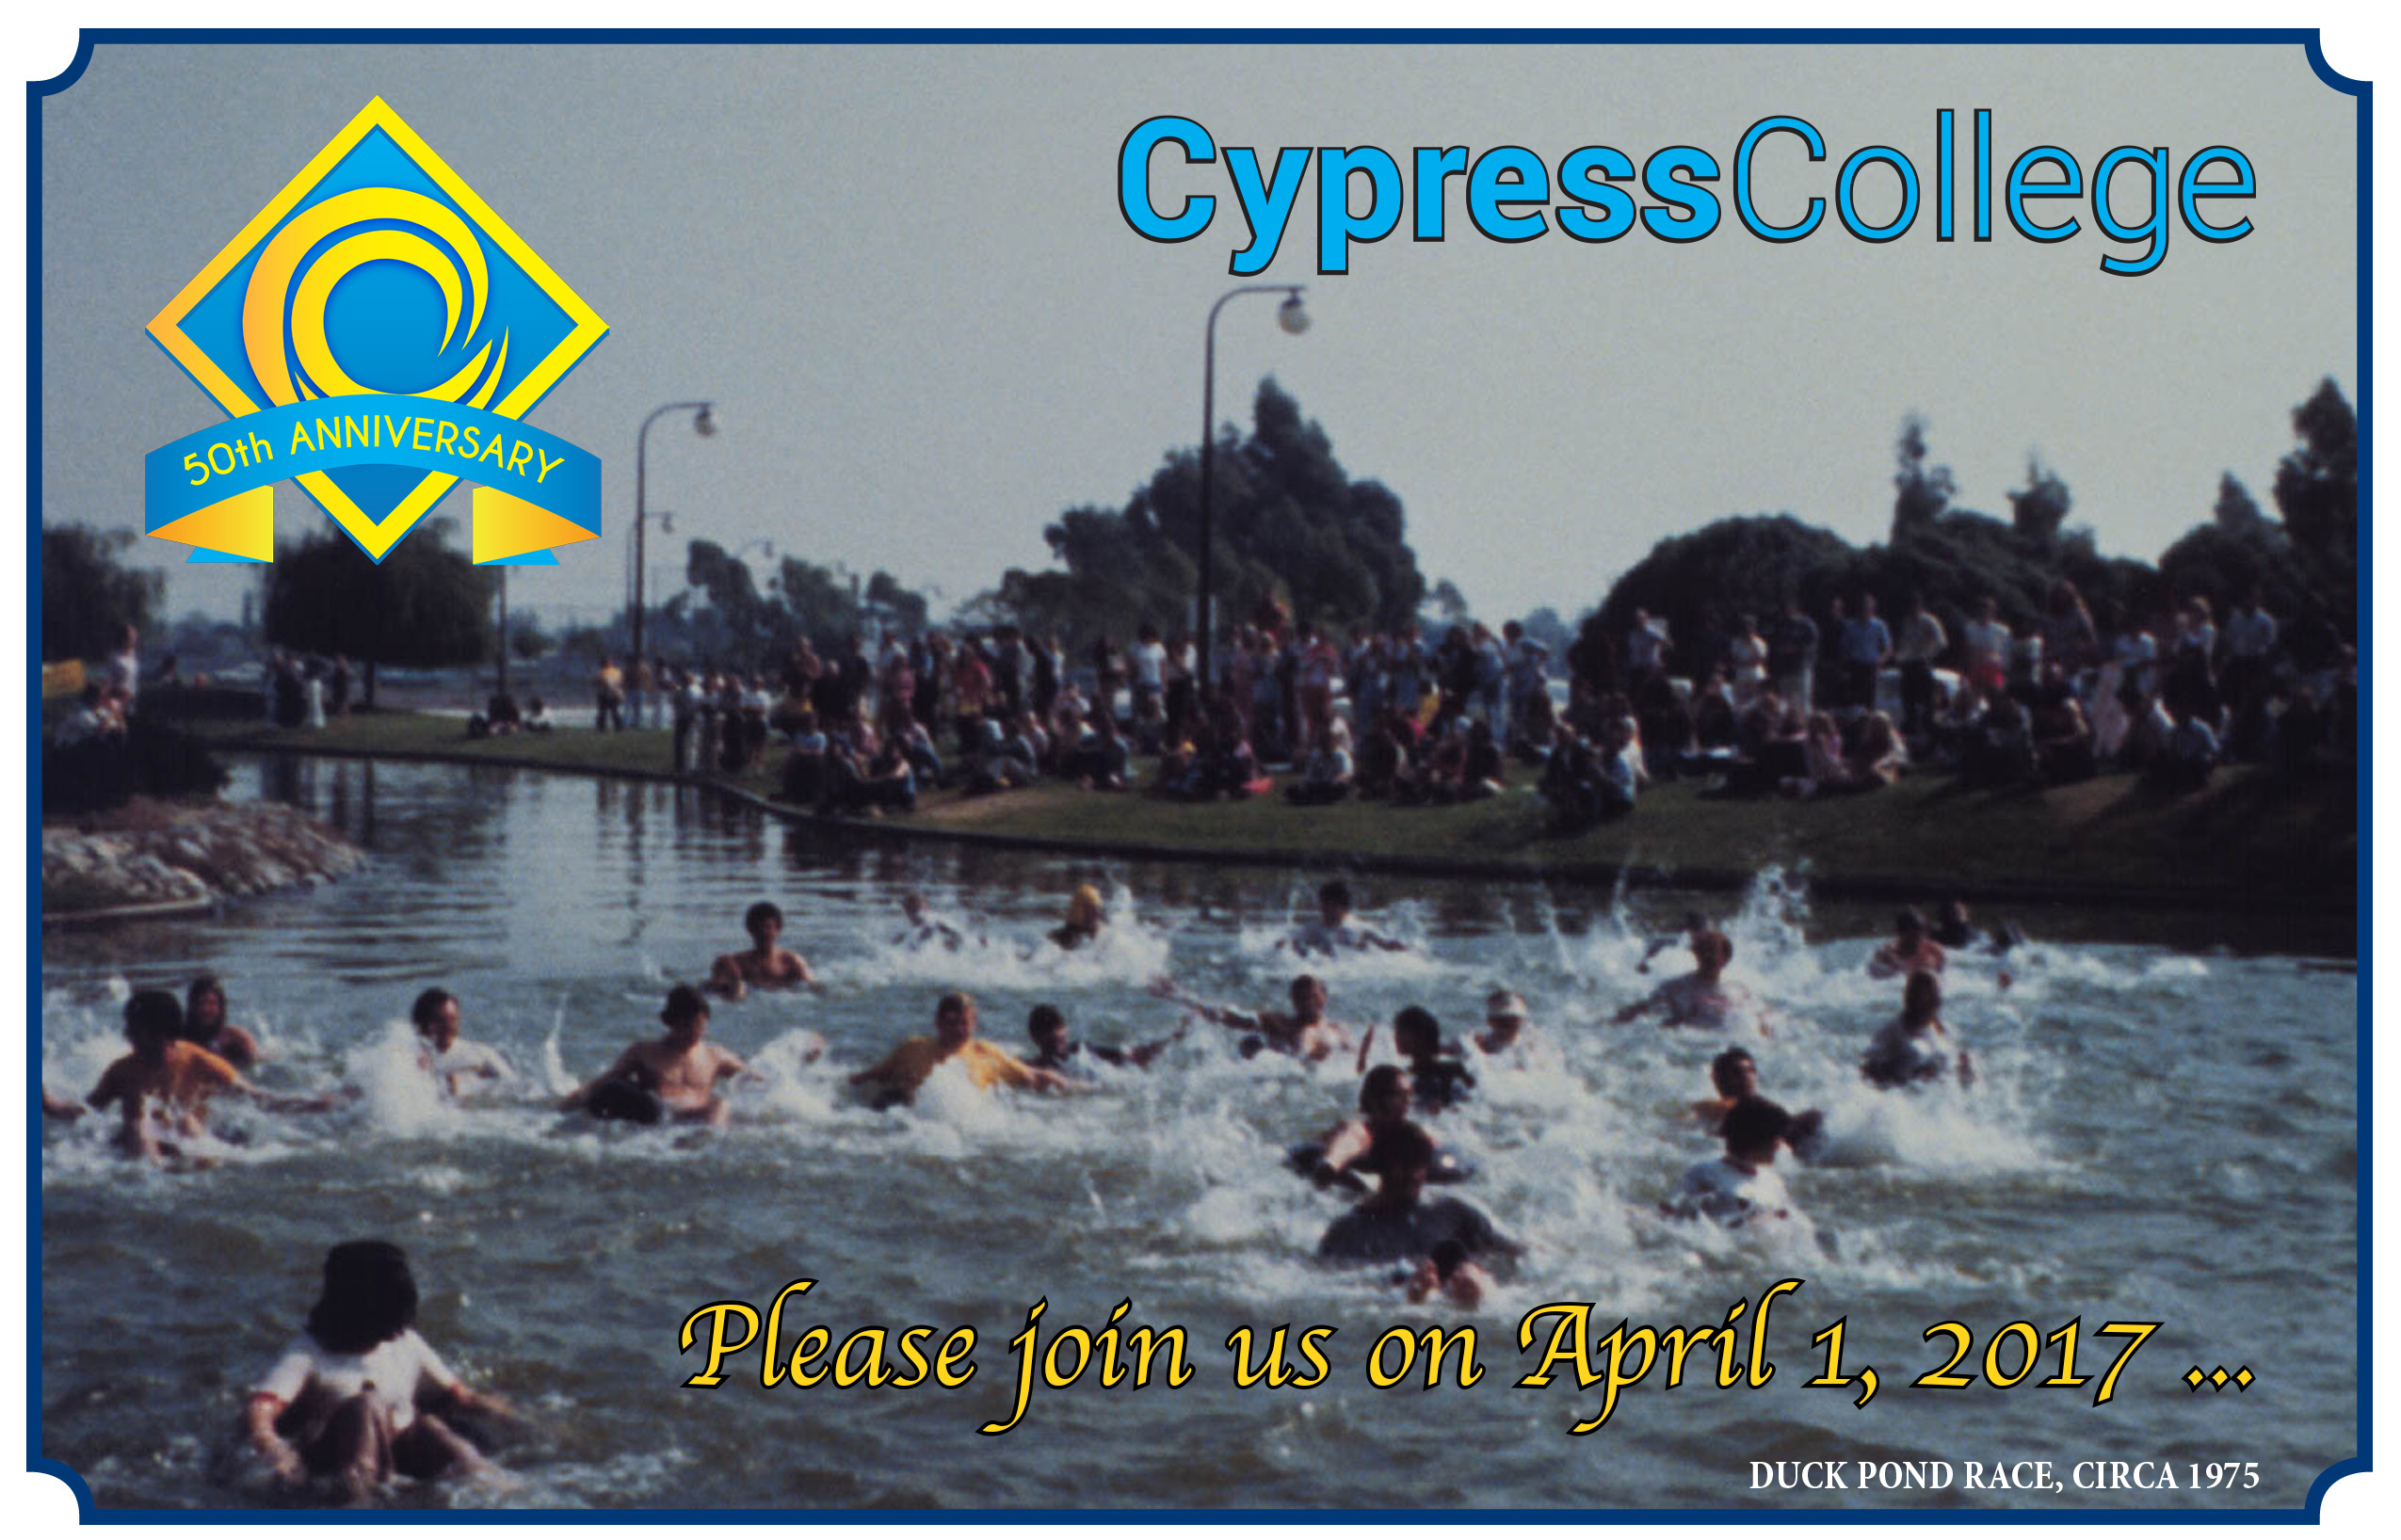 Cypress College 50th Anniversary flyer